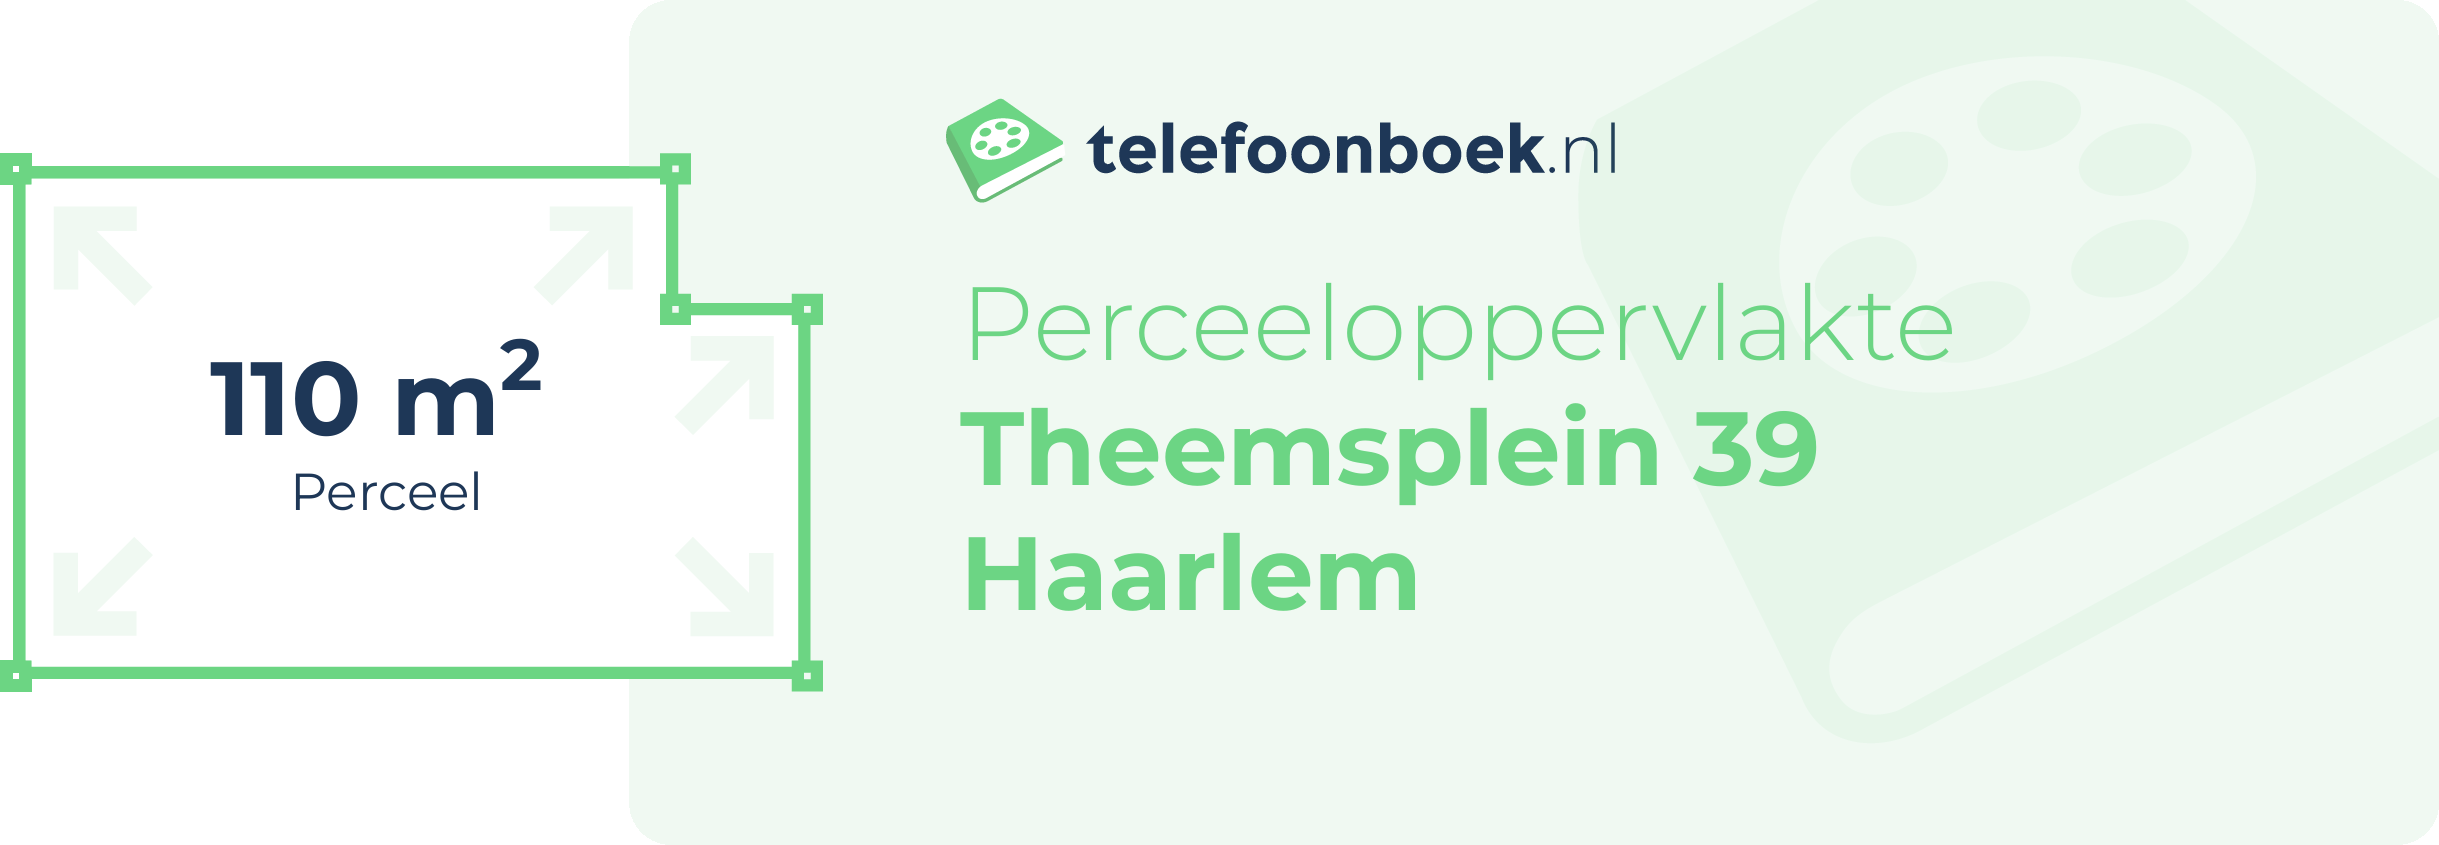 Perceeloppervlakte Theemsplein 39 Haarlem